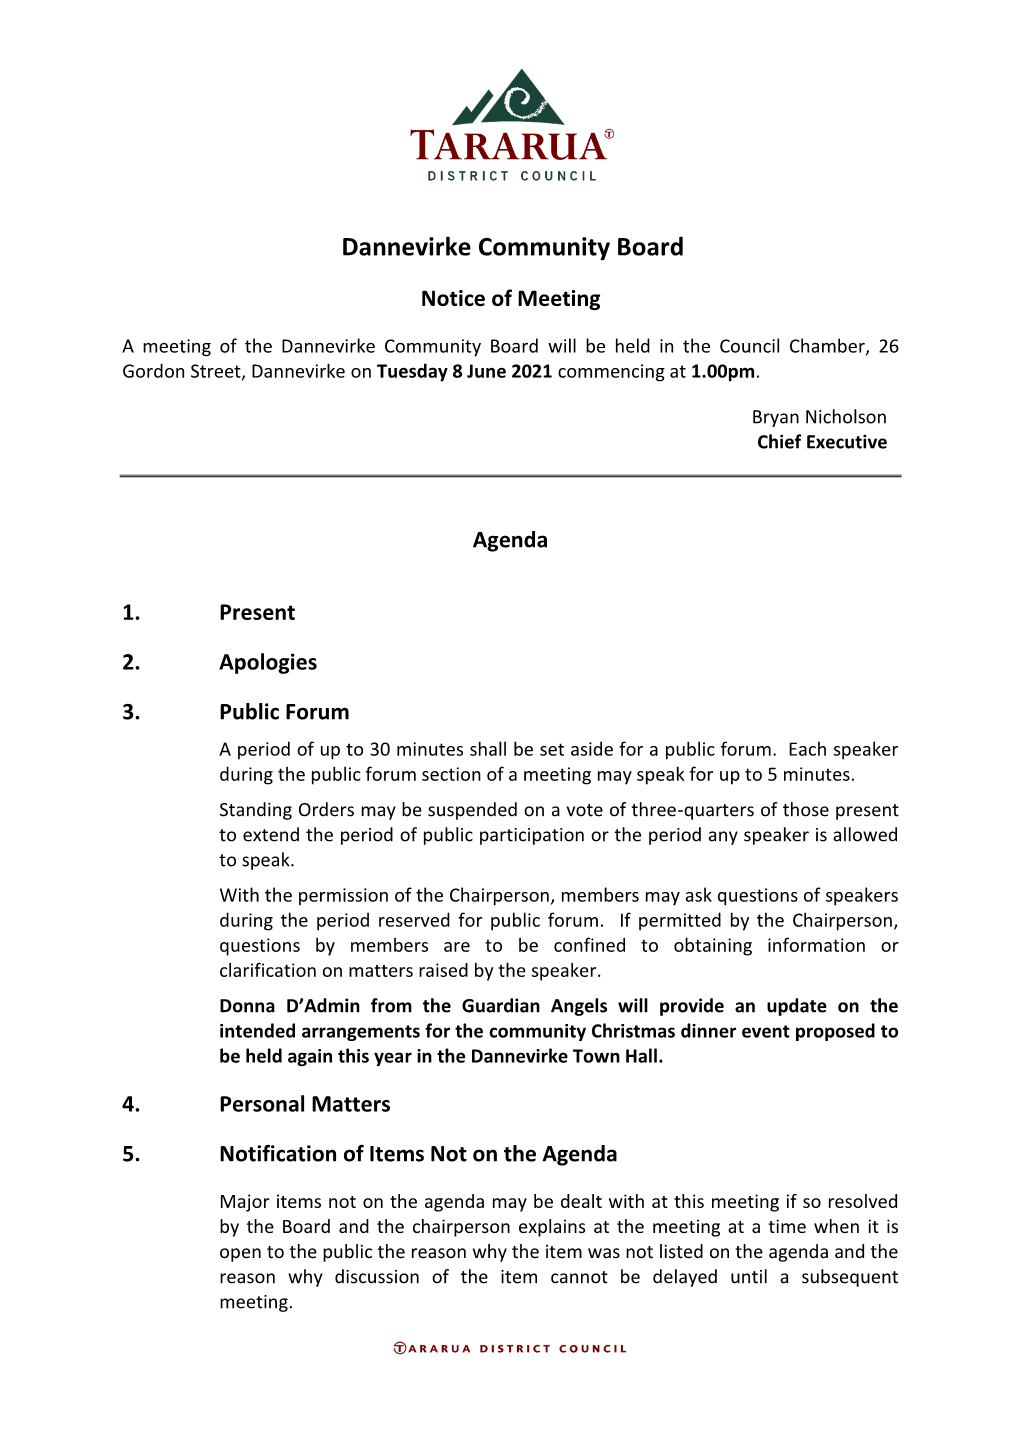 Agenda of Dannevirke Community Board Meeting